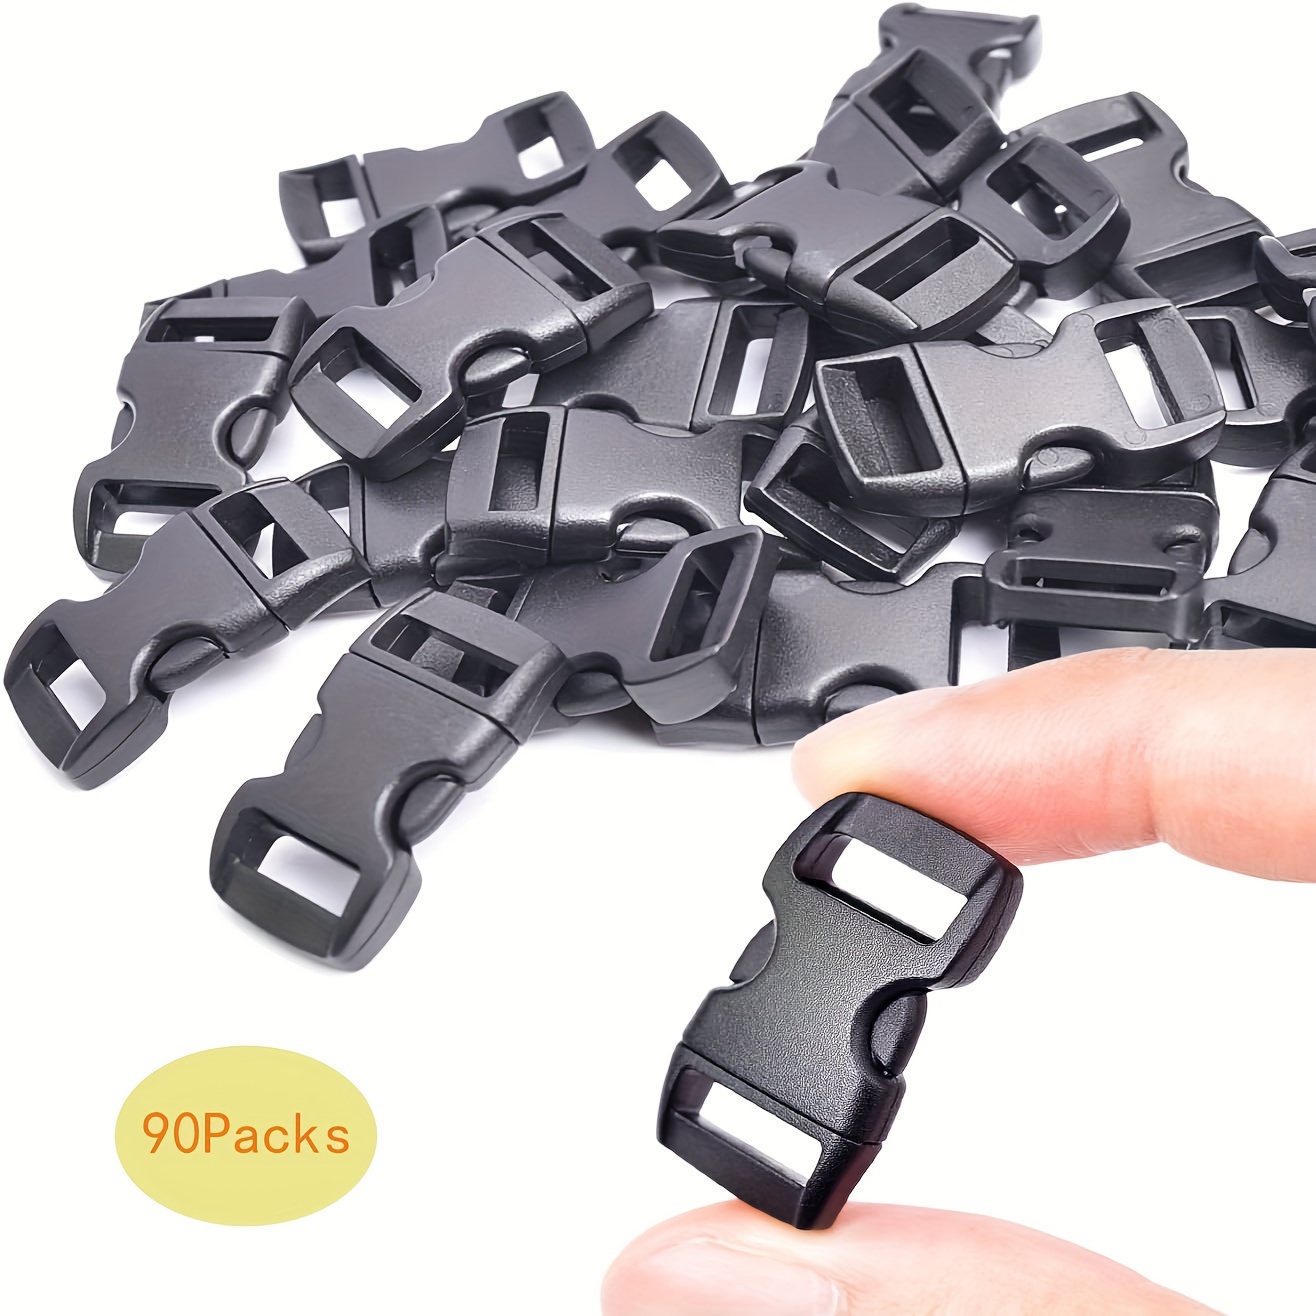 Plastic Black Curved Side Release Buckle w/Lock, 100pcs